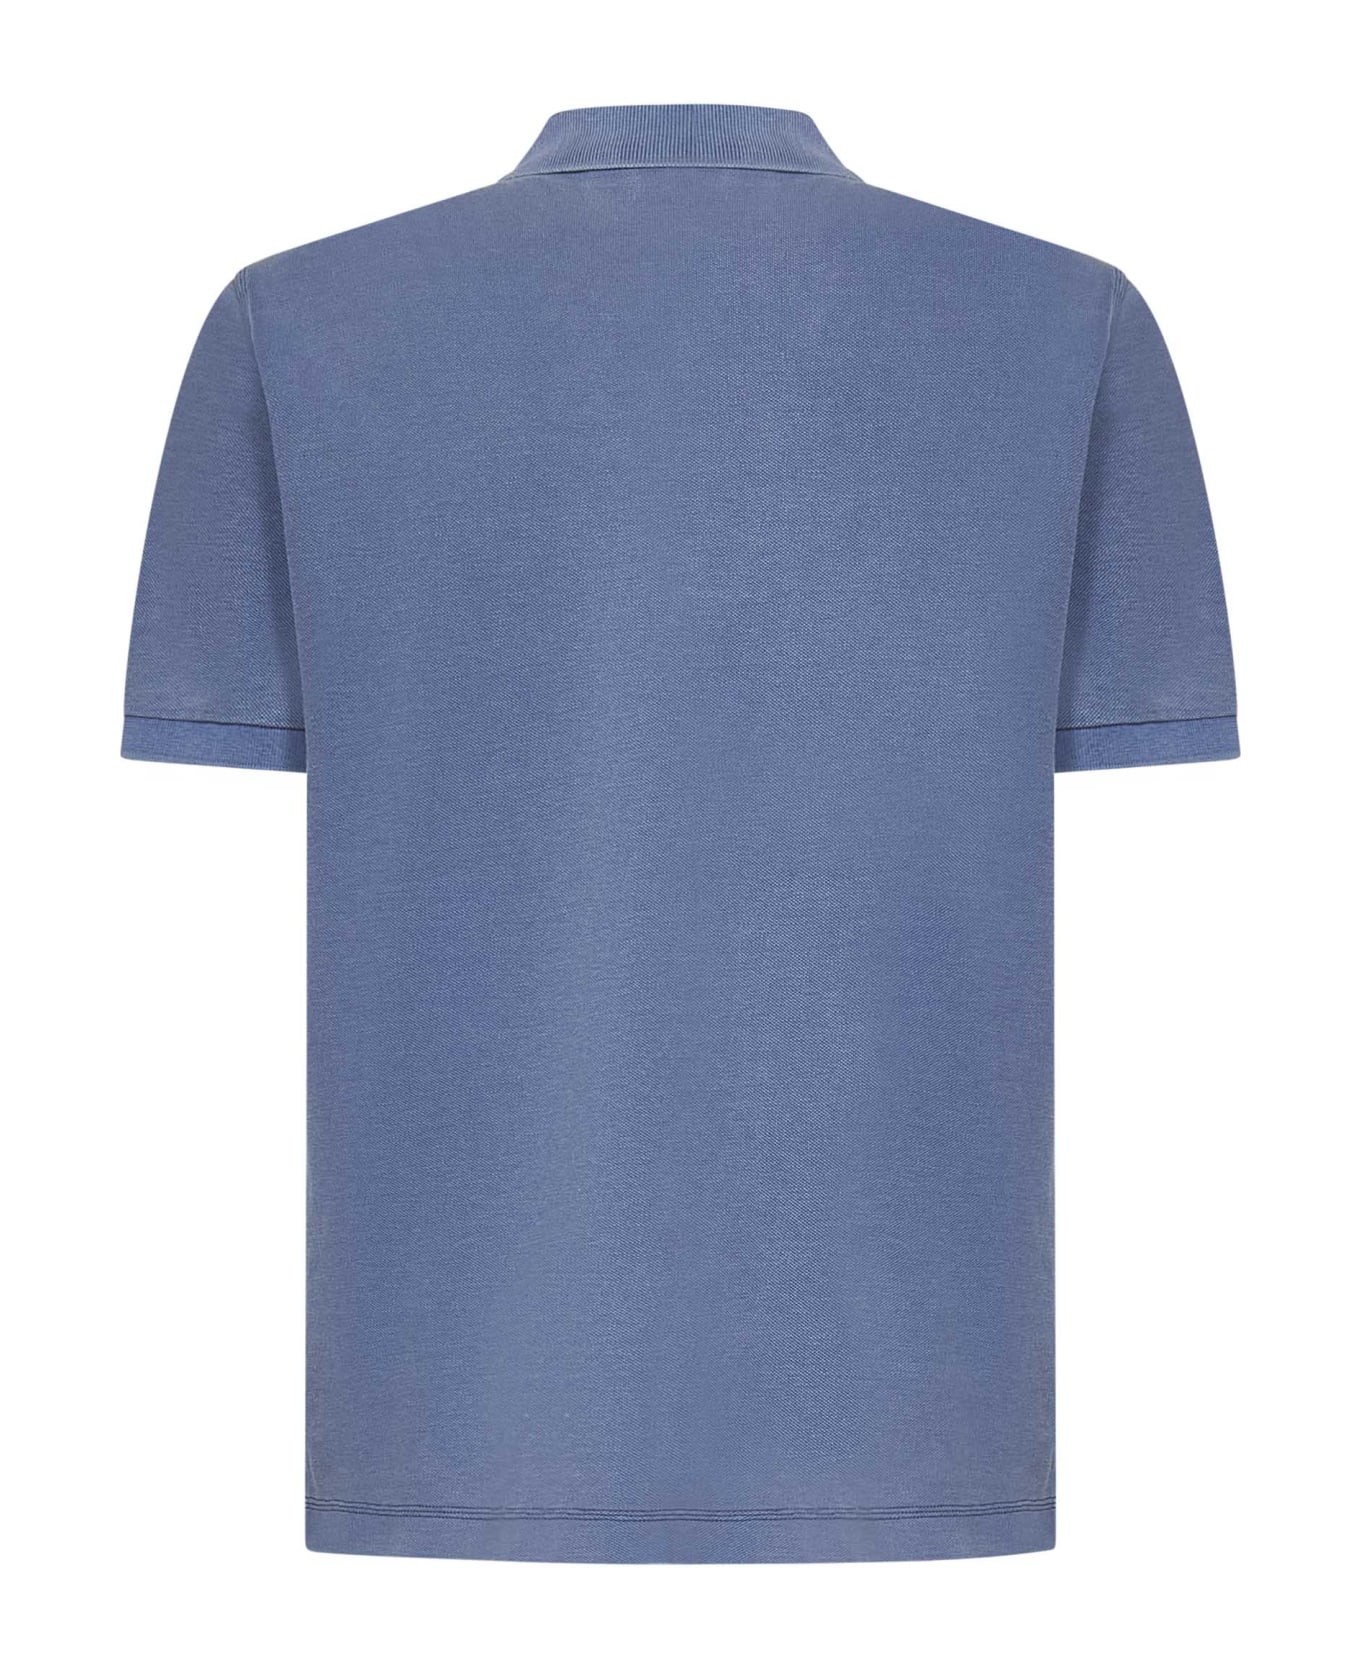 Lacoste Polo Shirt - Light blue